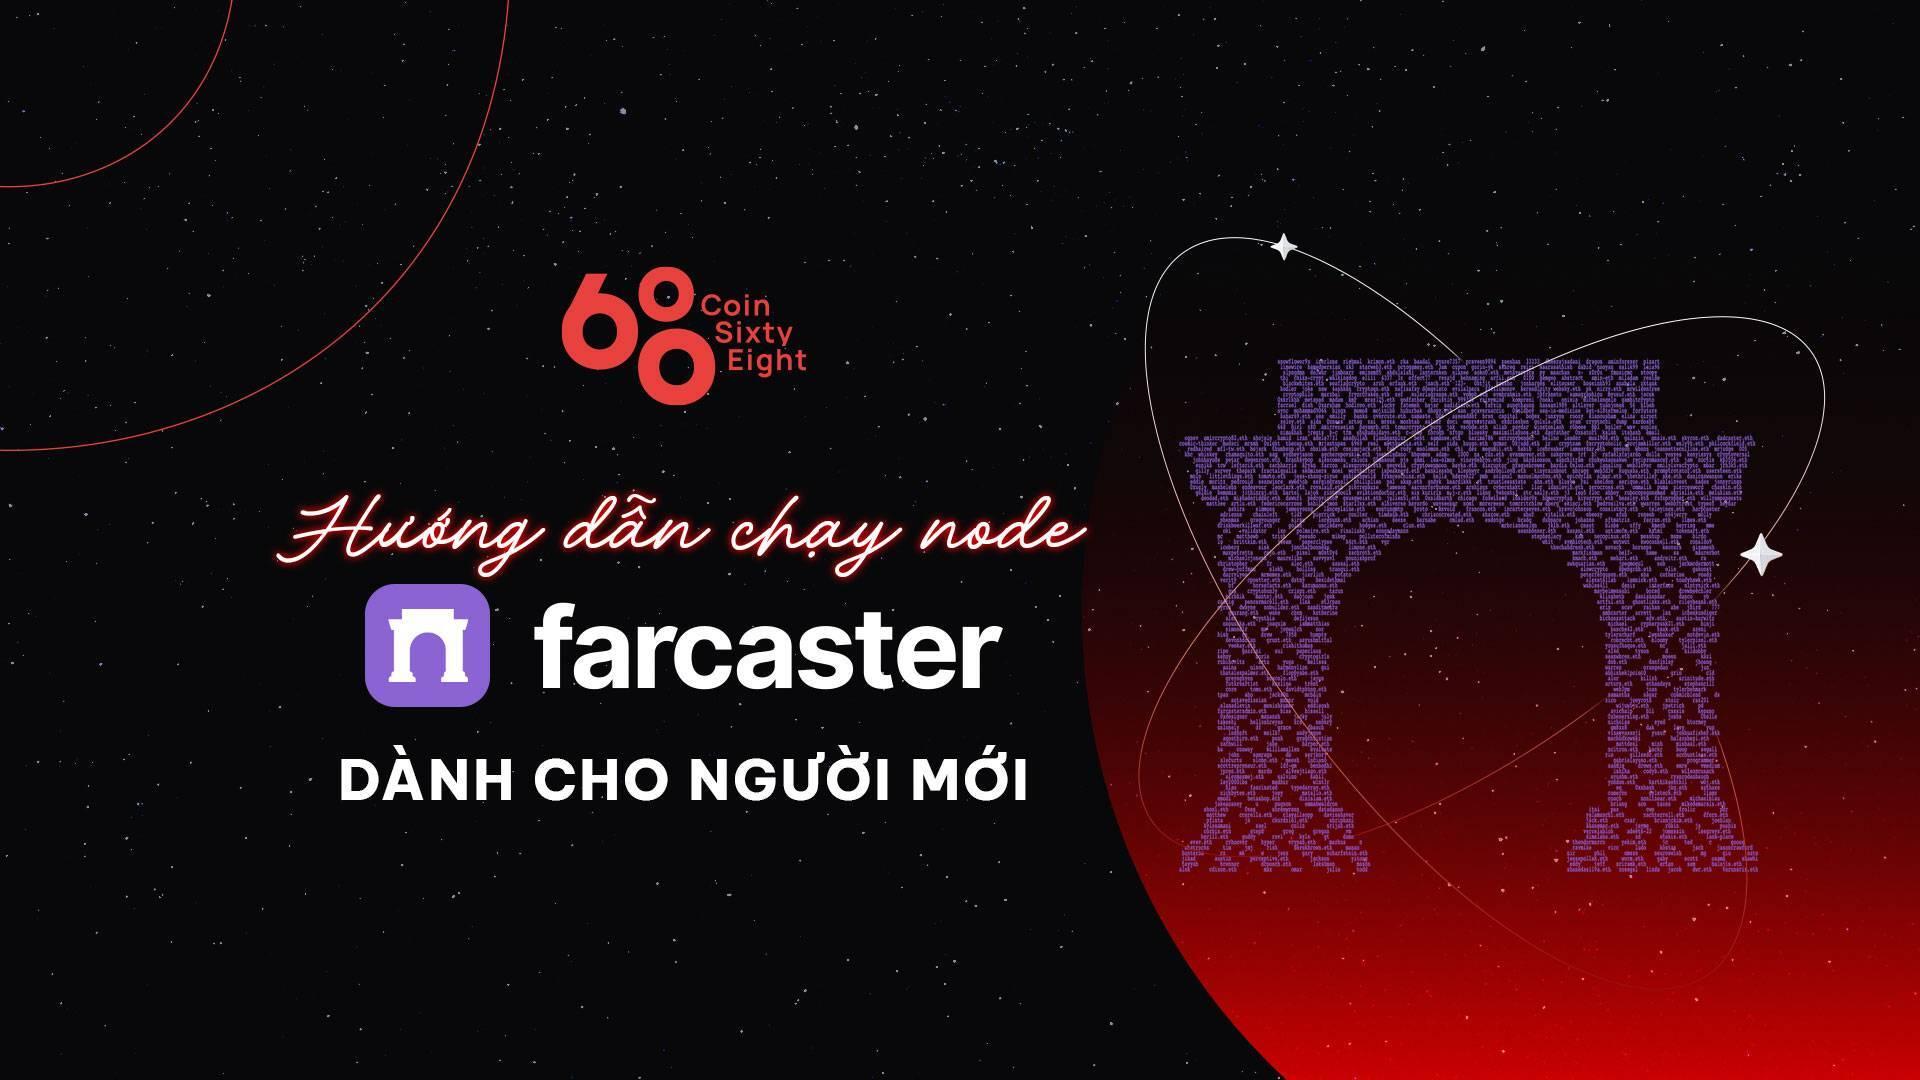 huong-dan-chay-node-farcaster-danh-cho-nguoi-moi